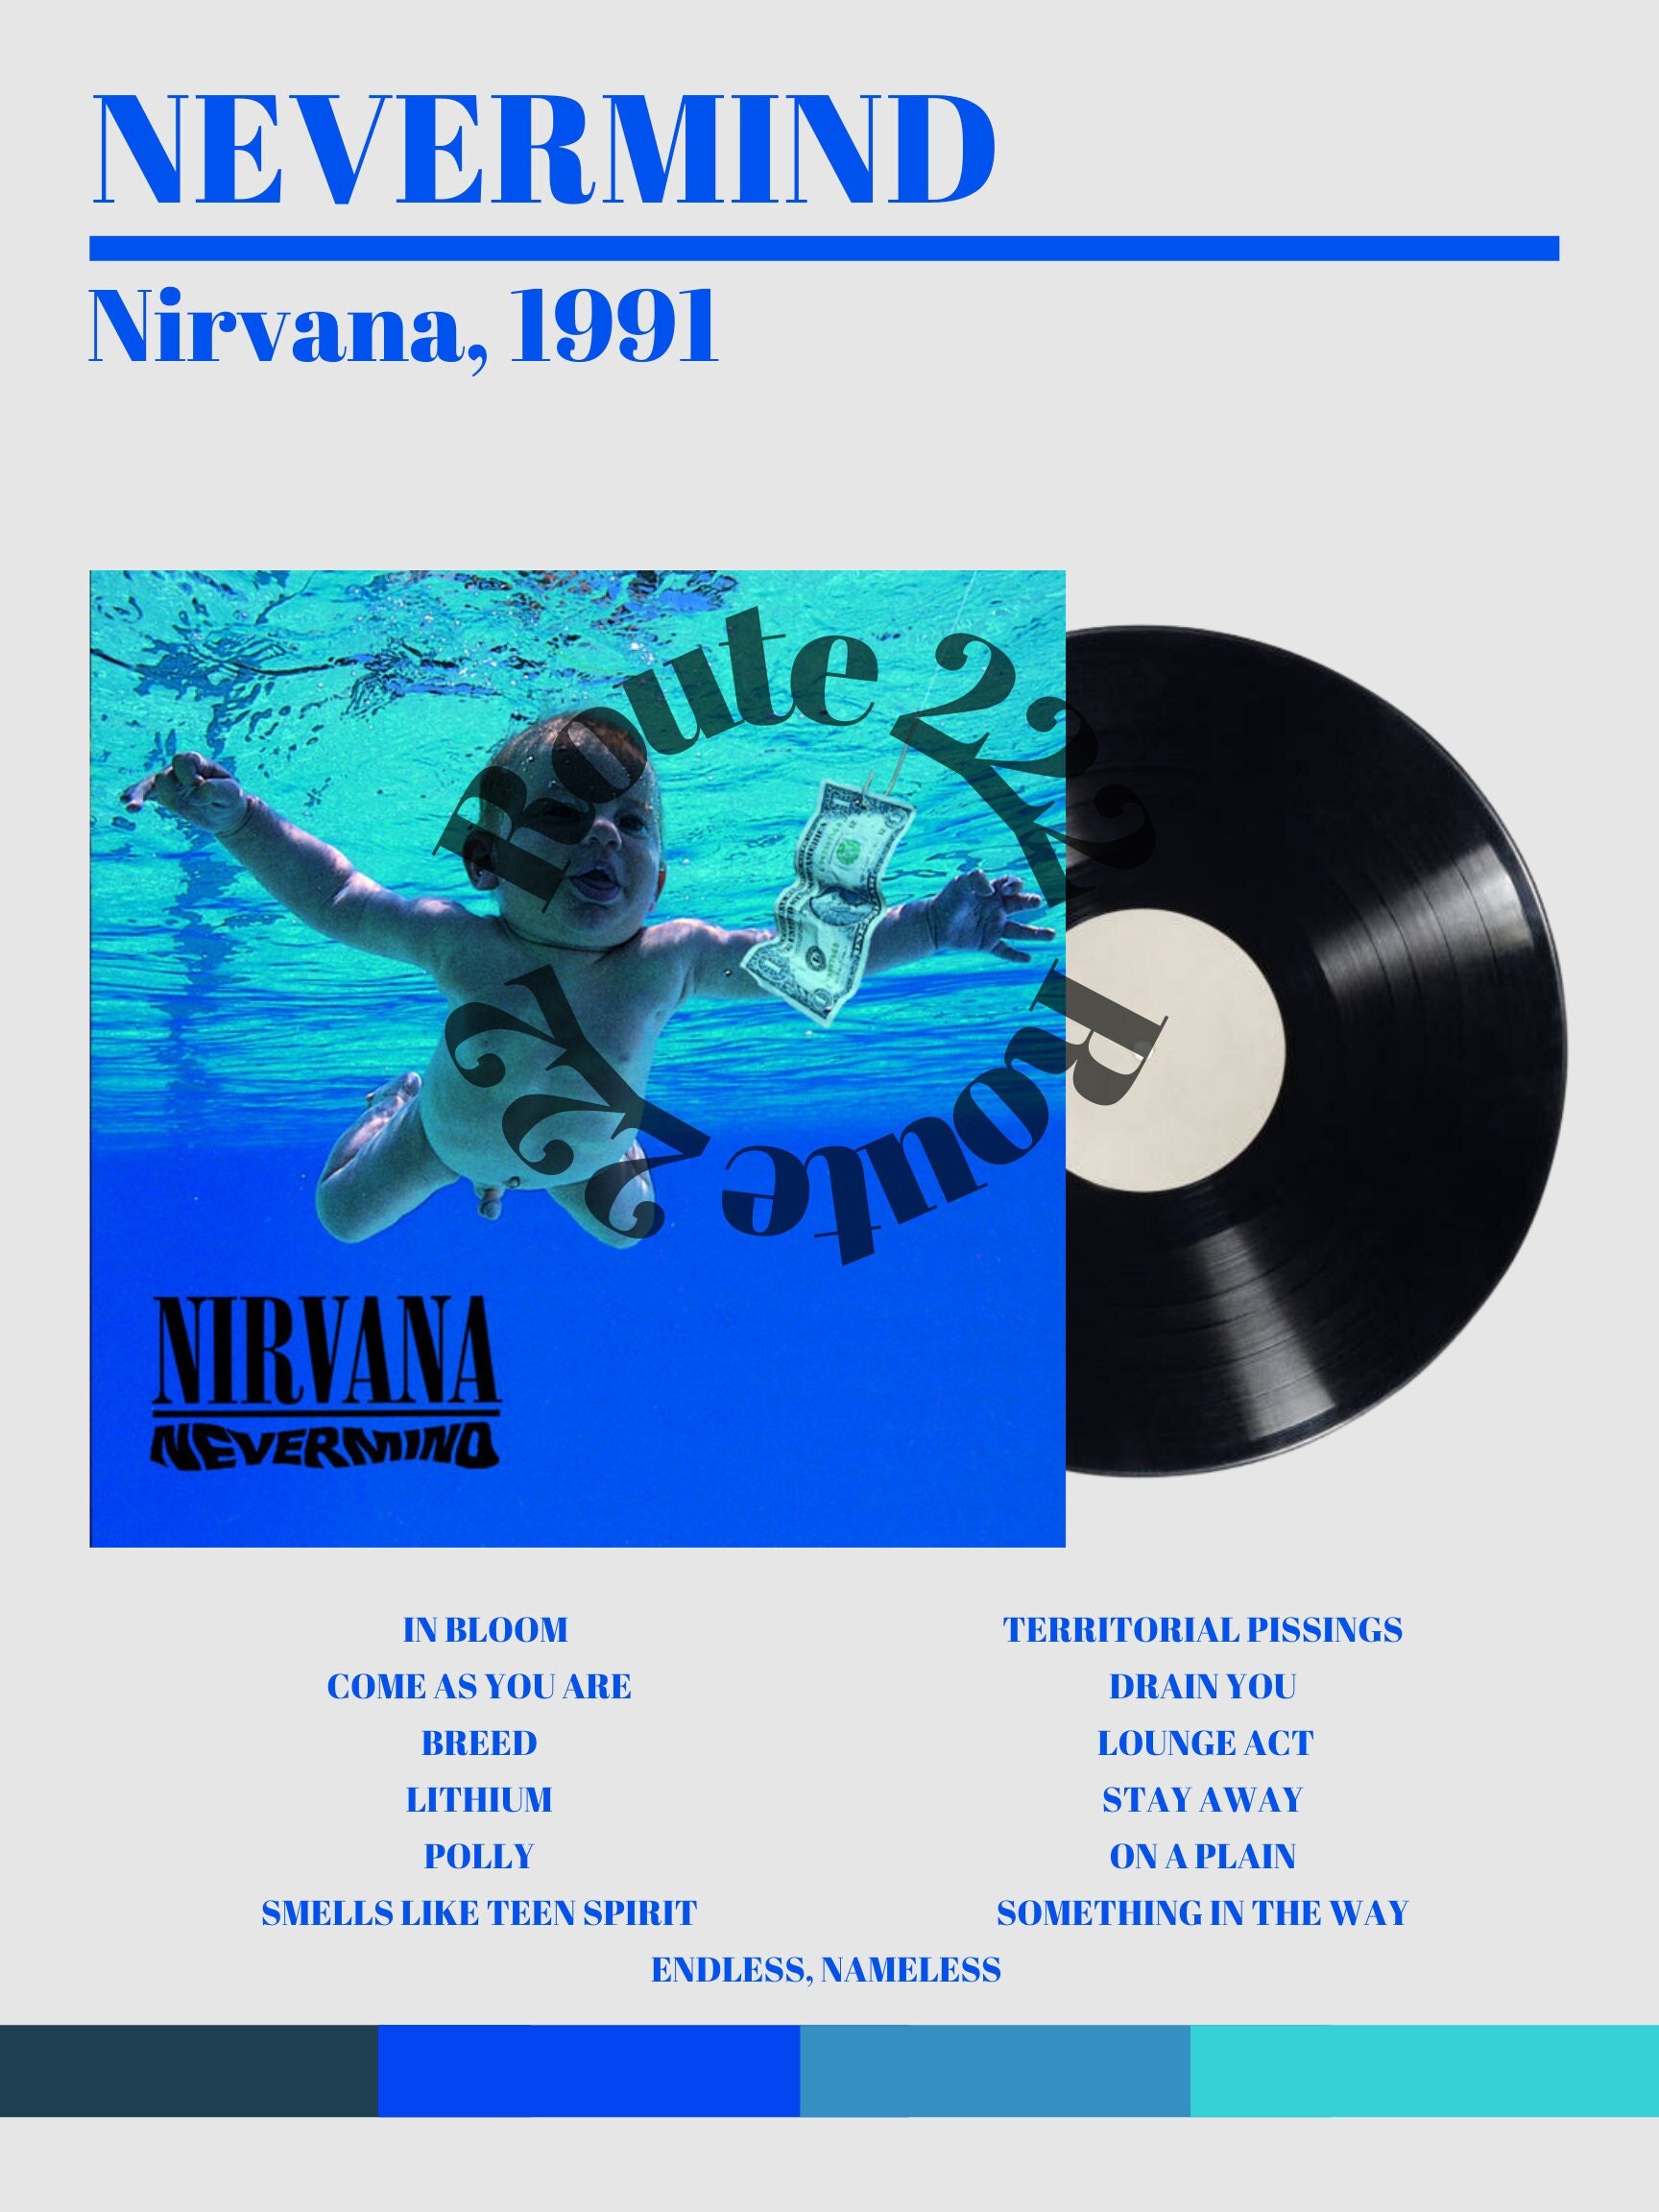 Nirvana Nevermind Vinyl Album Cover sold by Andy Ivanov, SKU 24993892